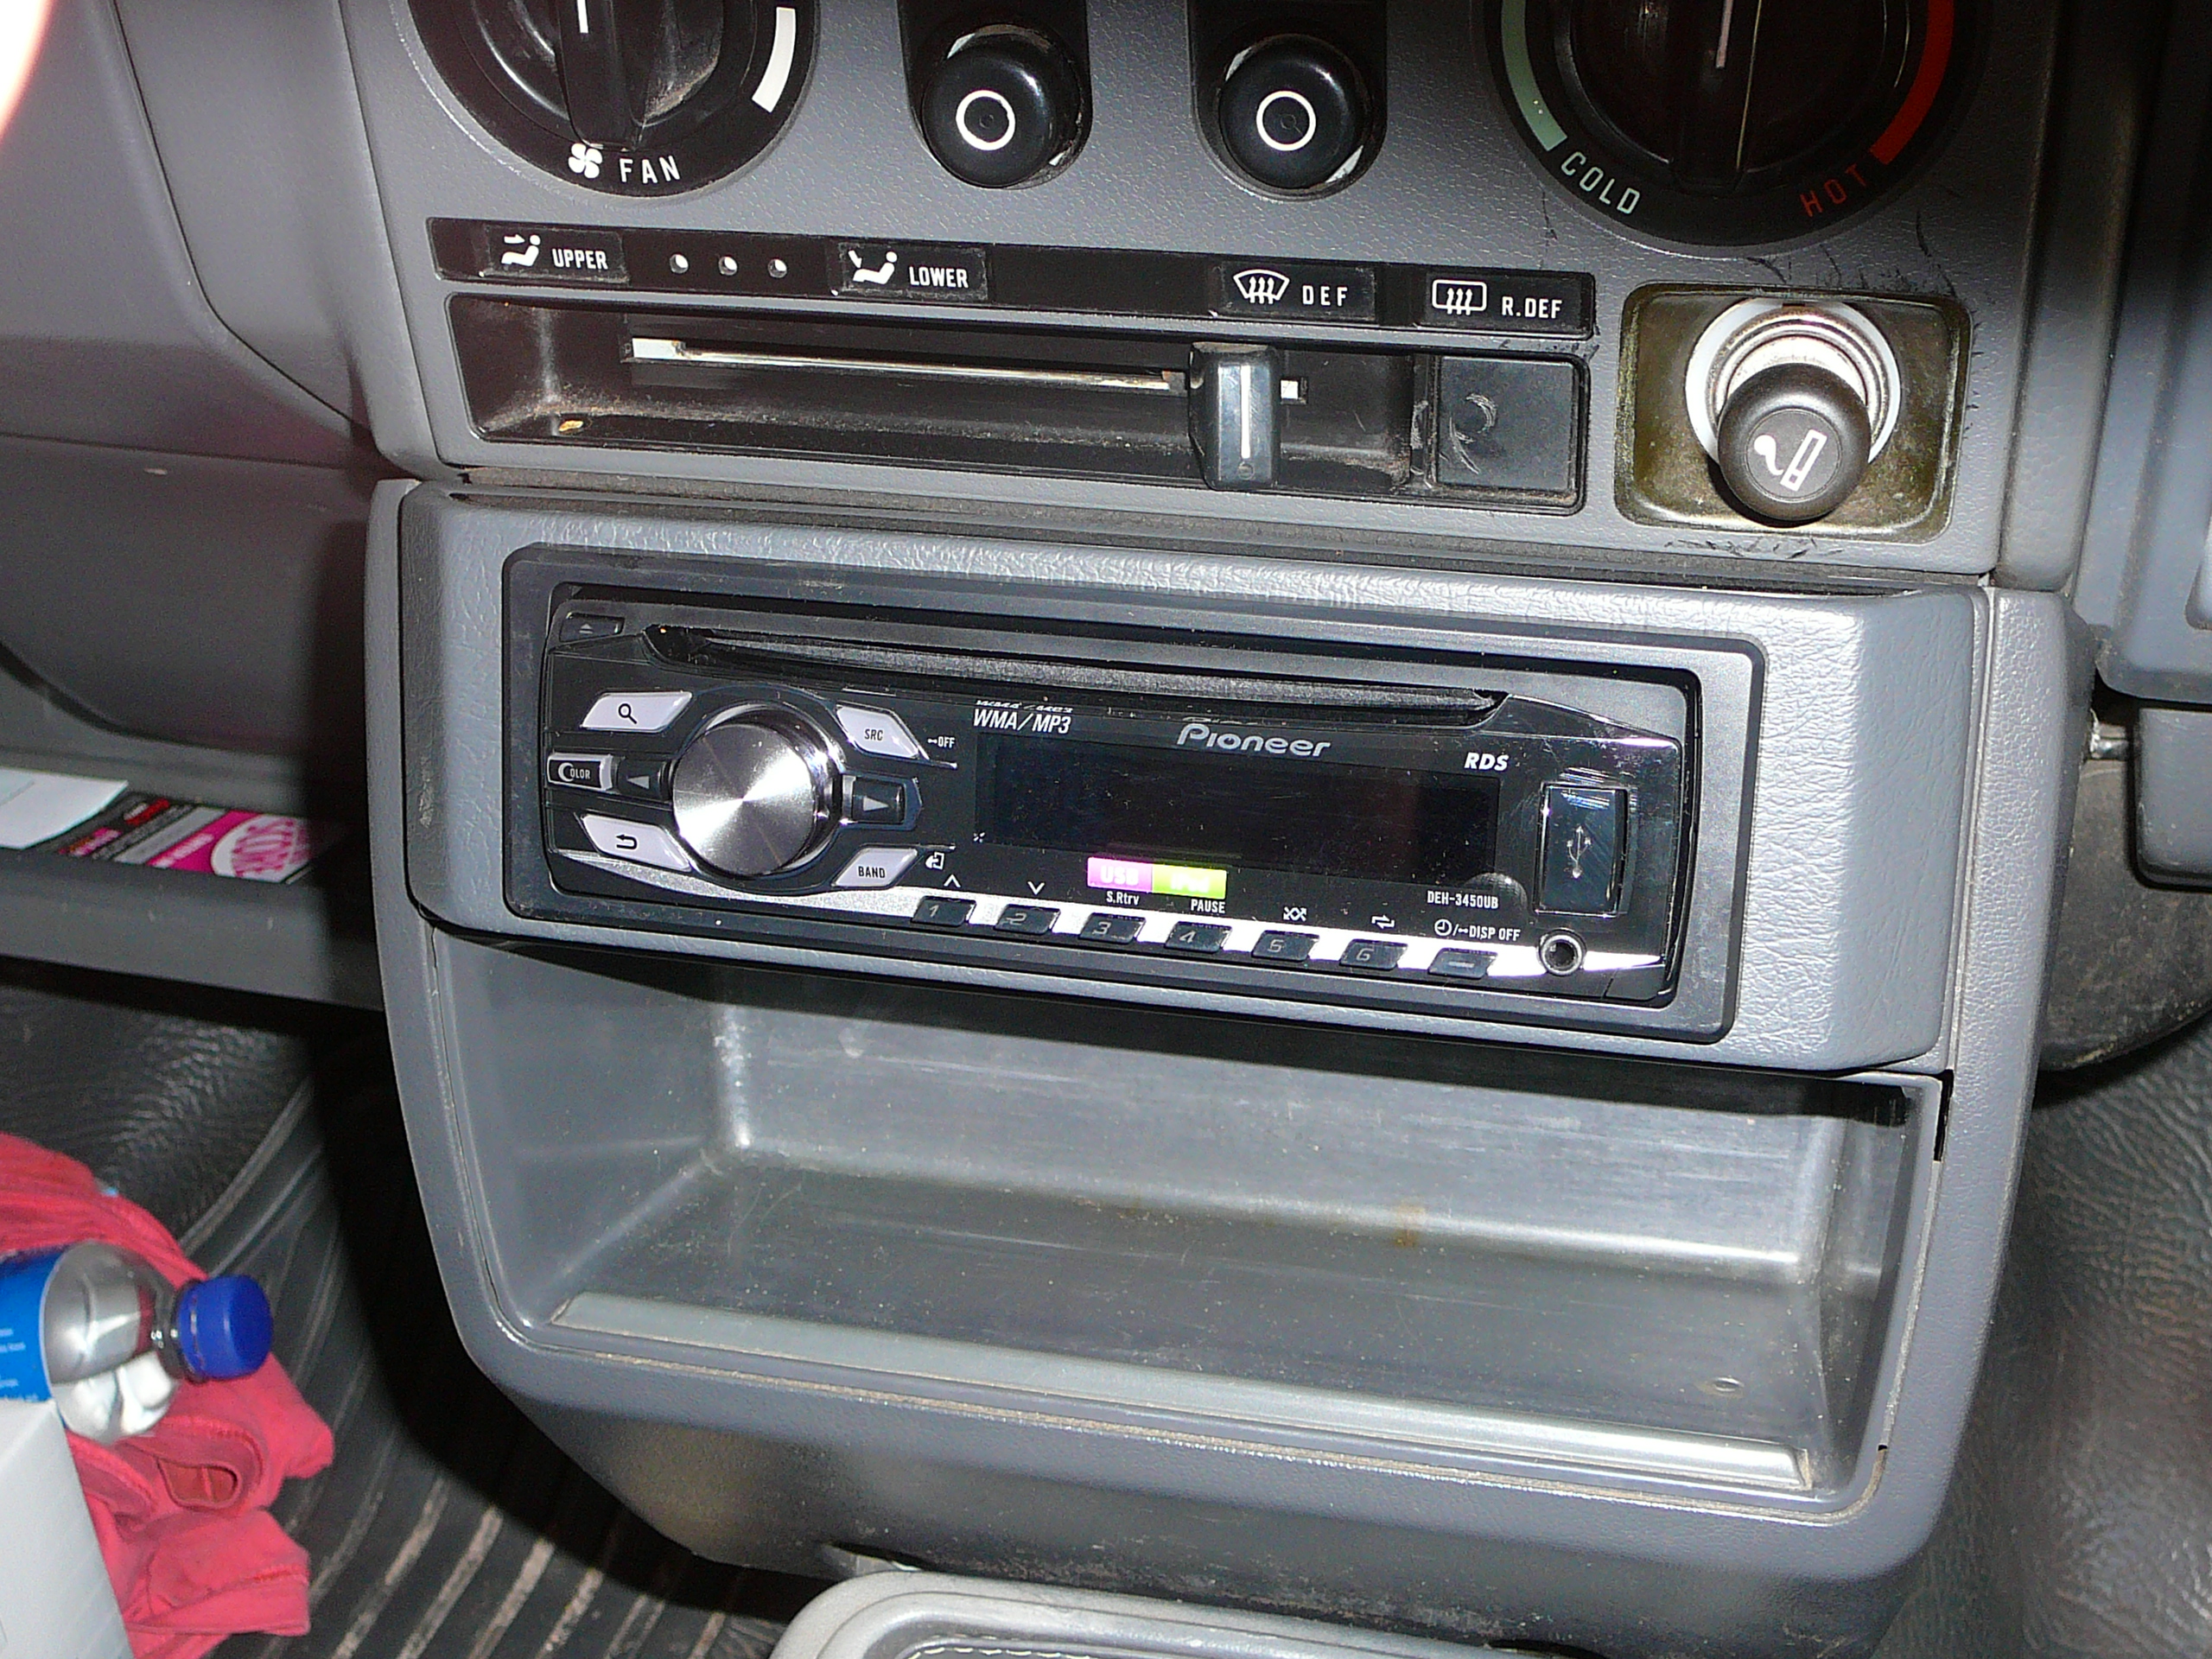 Subaru Brumby, Pioneer CD Radio Headunit and dash kit installation